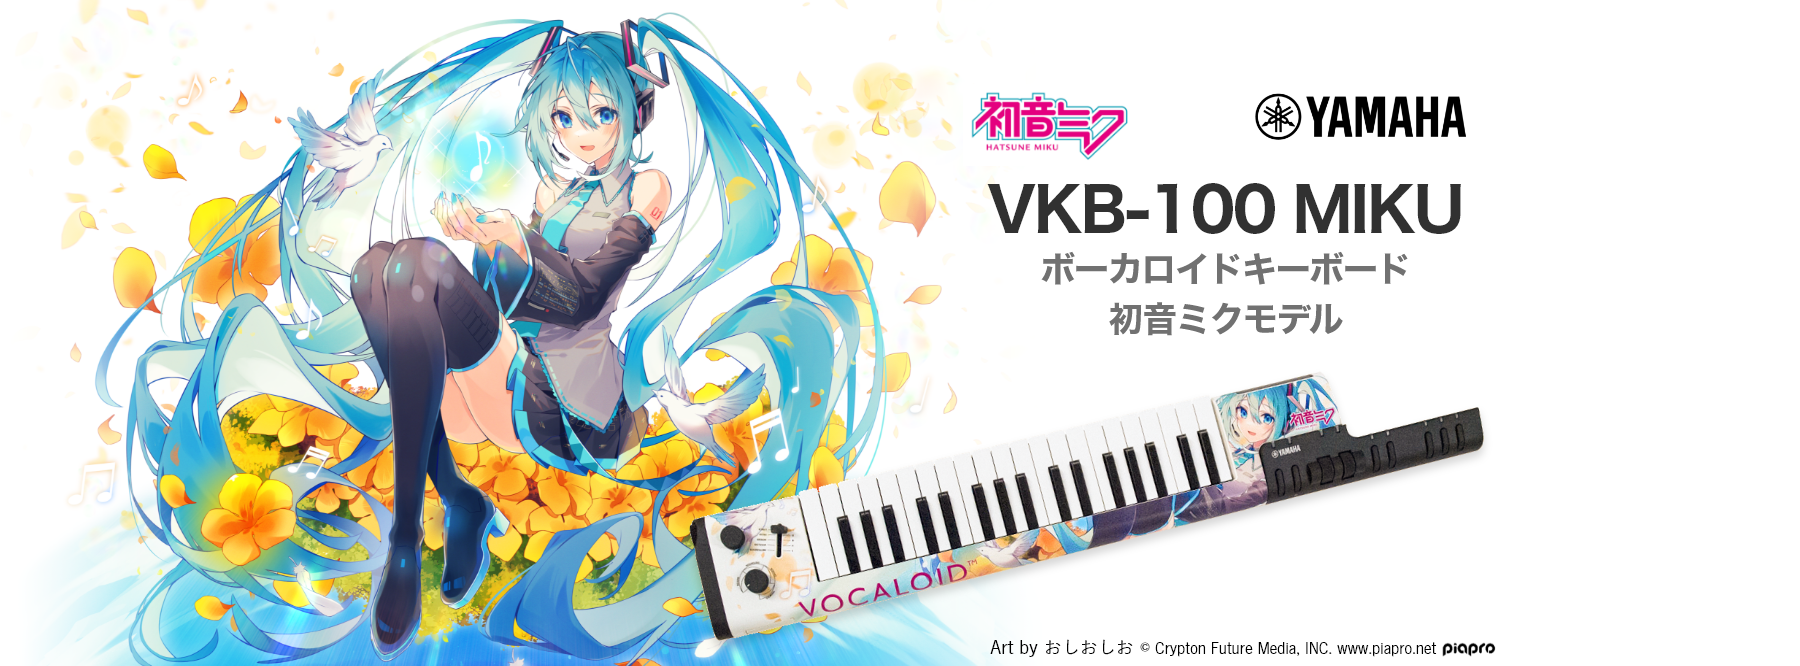 YAMAHA【VKB100 MIKU】話題のボーカロイドキーボード 初音ミク限定デザインモデル発売中！